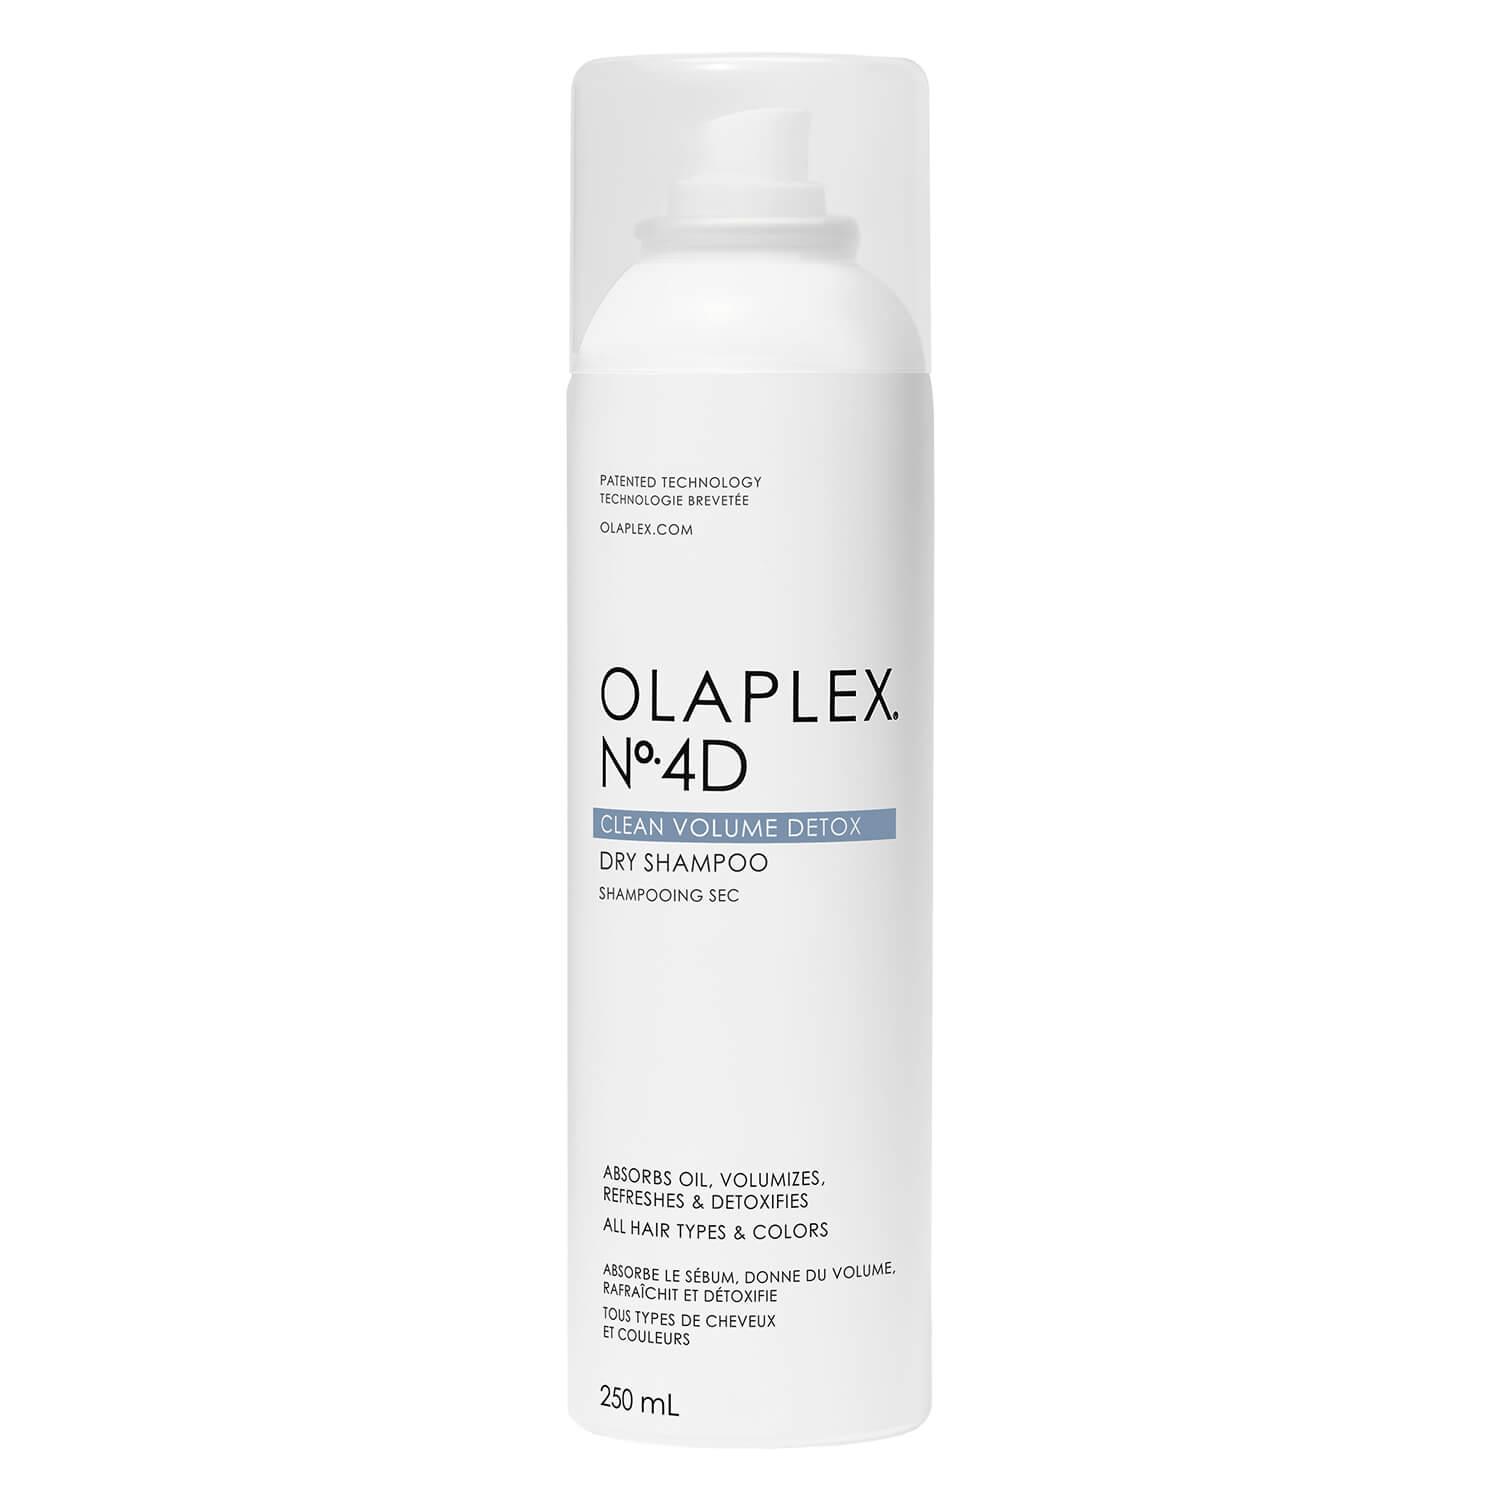 Olaplex - Clean Volume Detox Dry Shampoo No. 4D